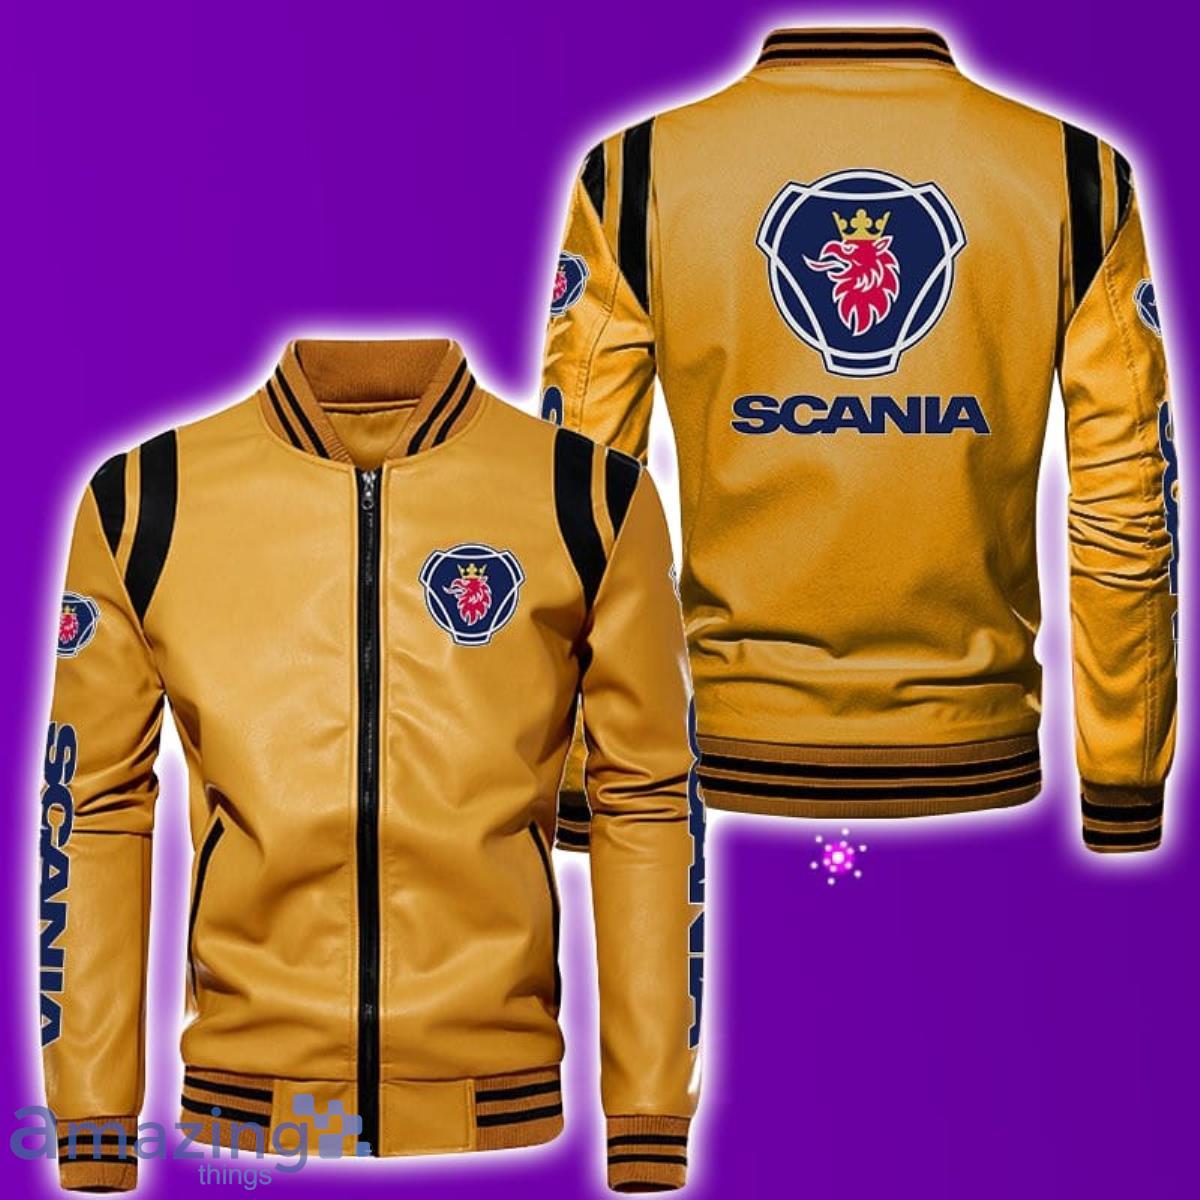 Scania coat -  France